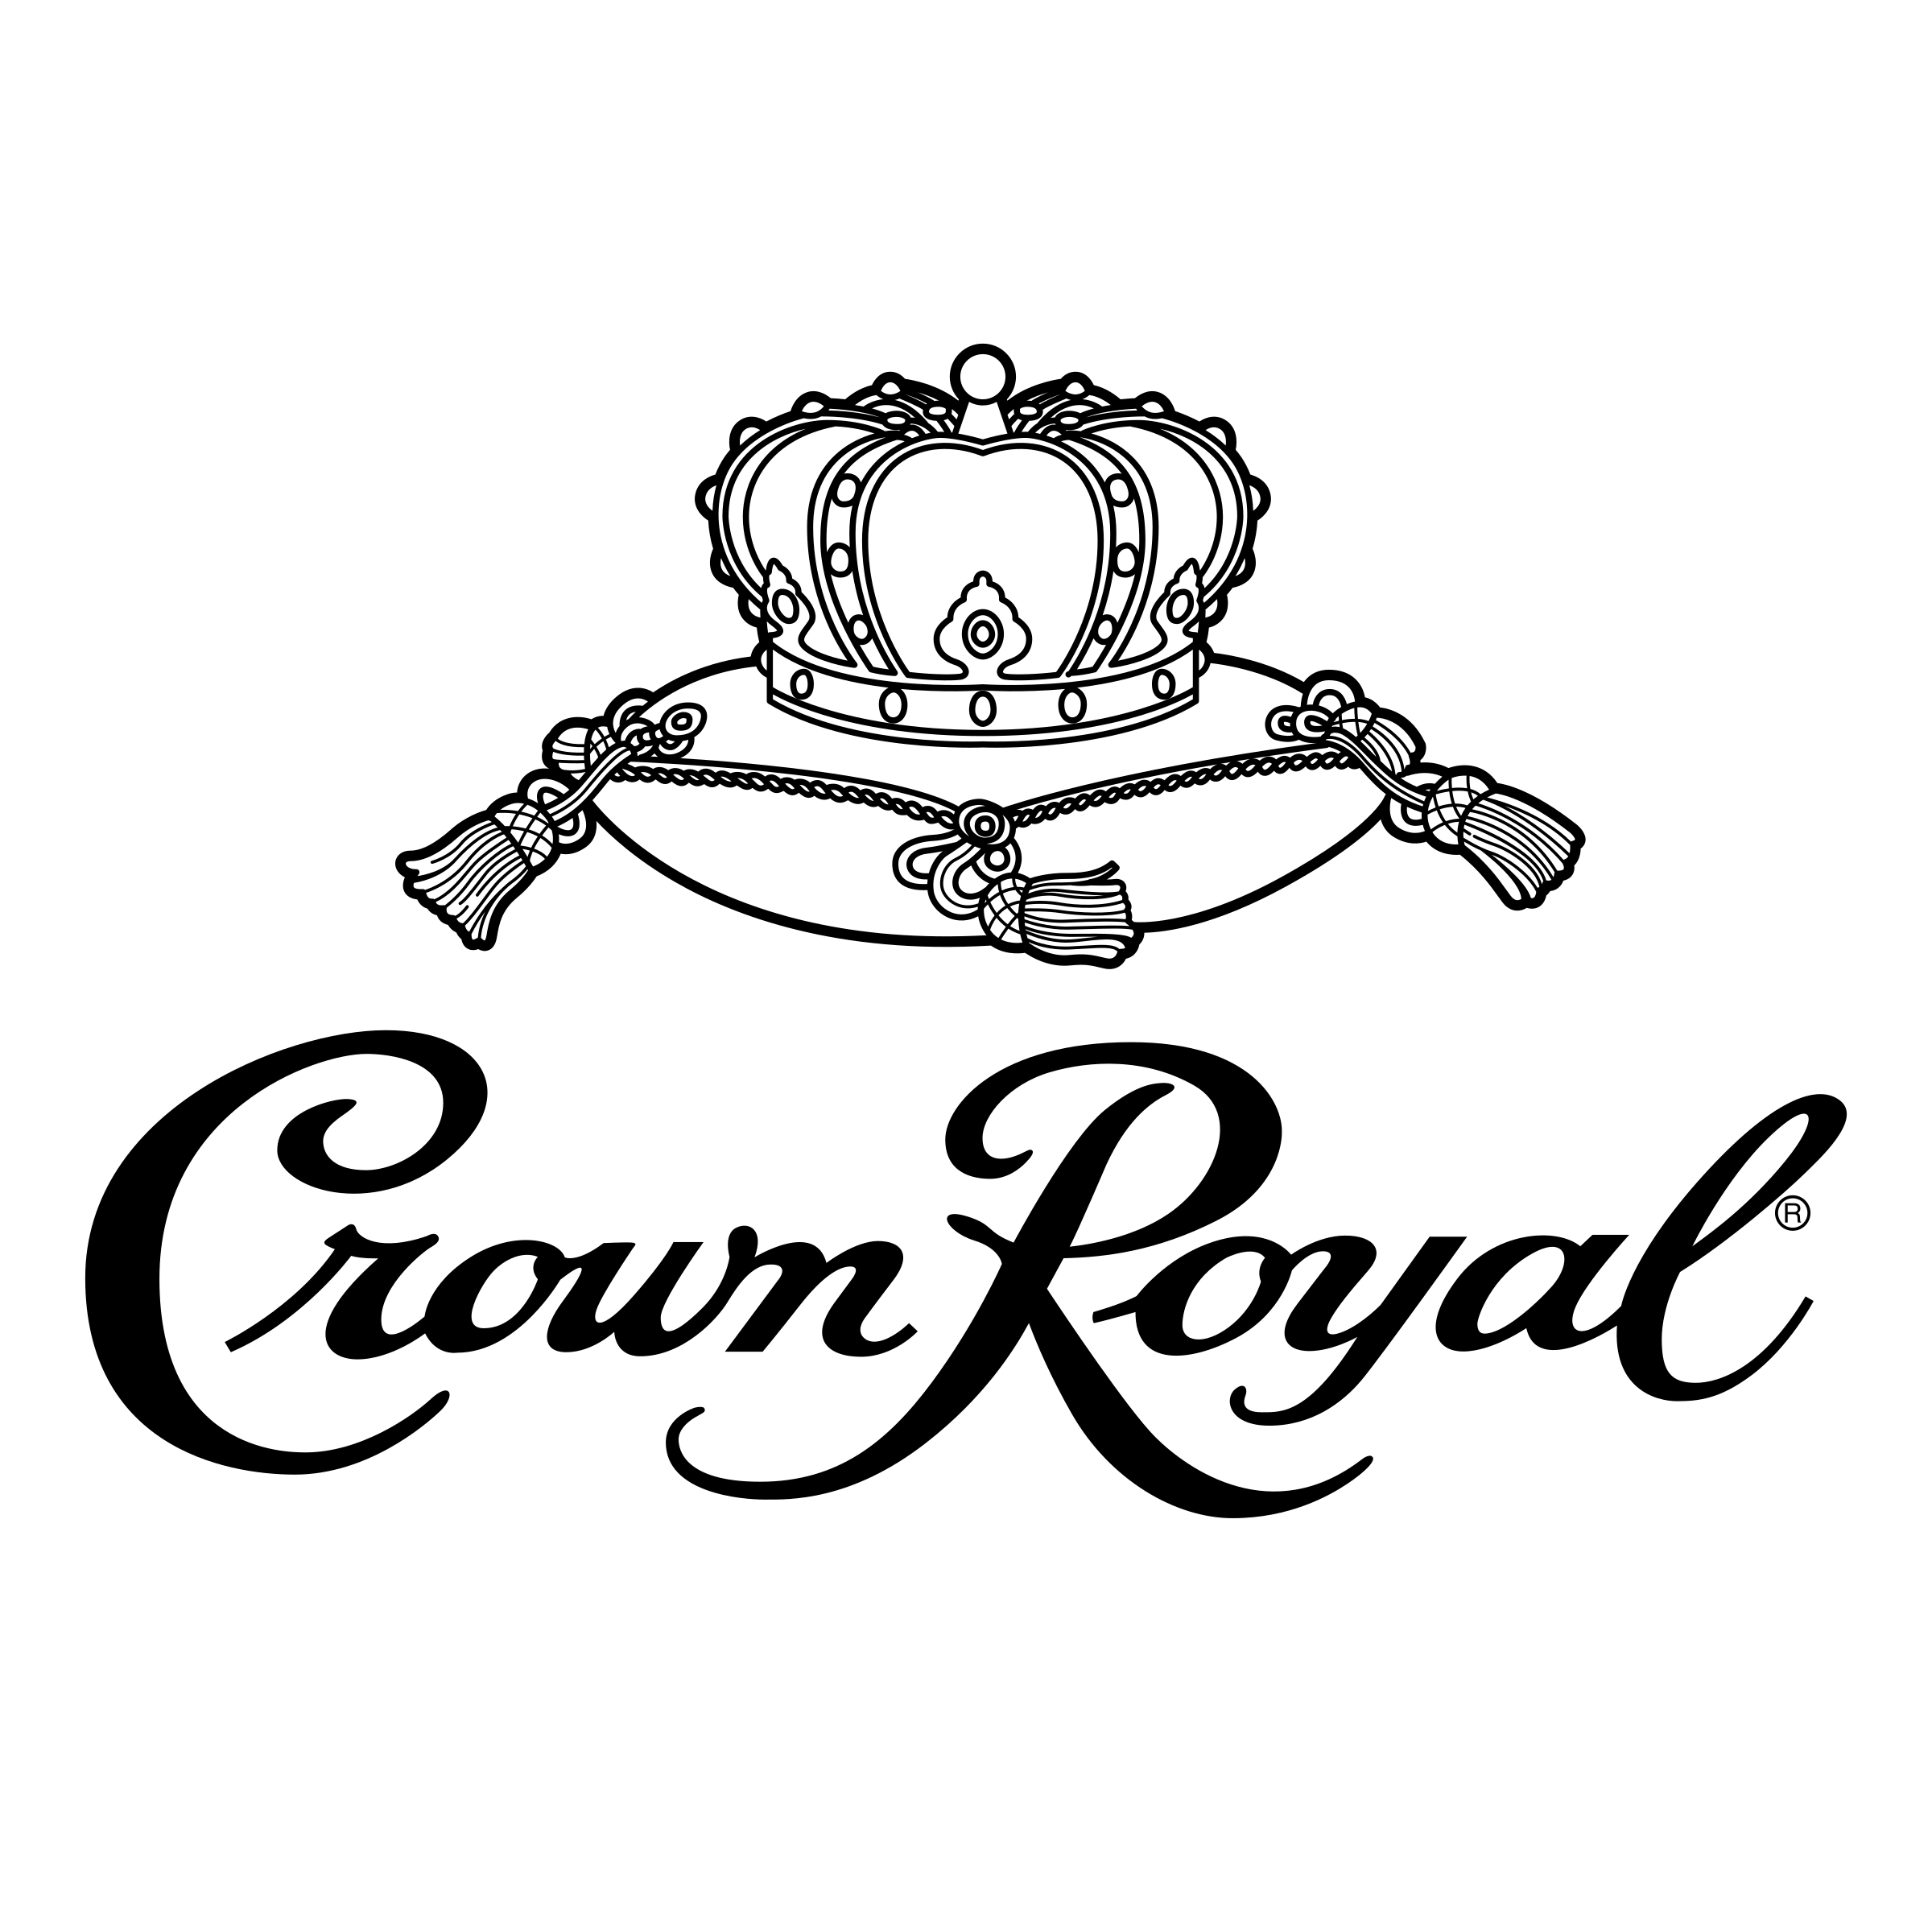 Crown Royal Logo - Crown Royal Logo PNG Transparent & SVG Vector - Freebie Supply